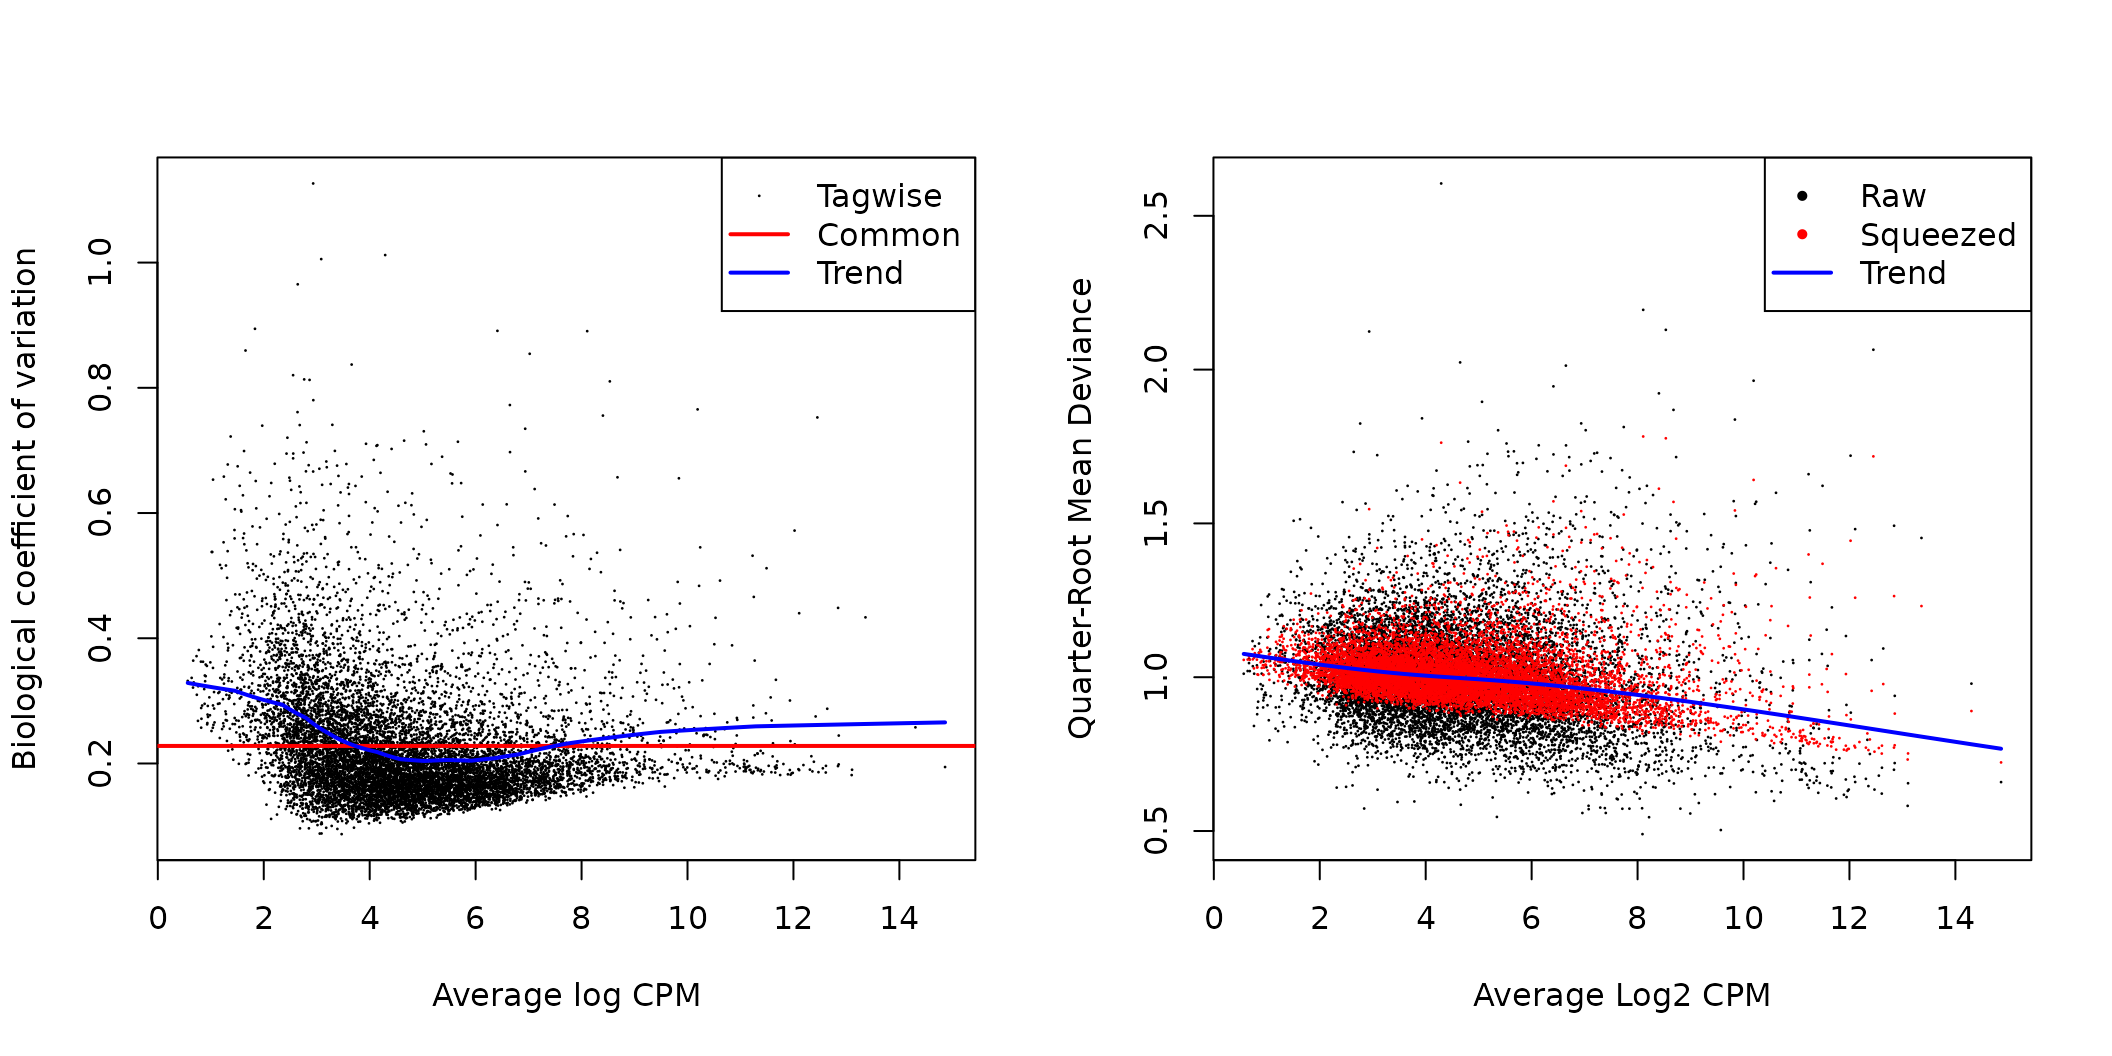 edgeR BCV and quasi-likelihood dispersion plots.